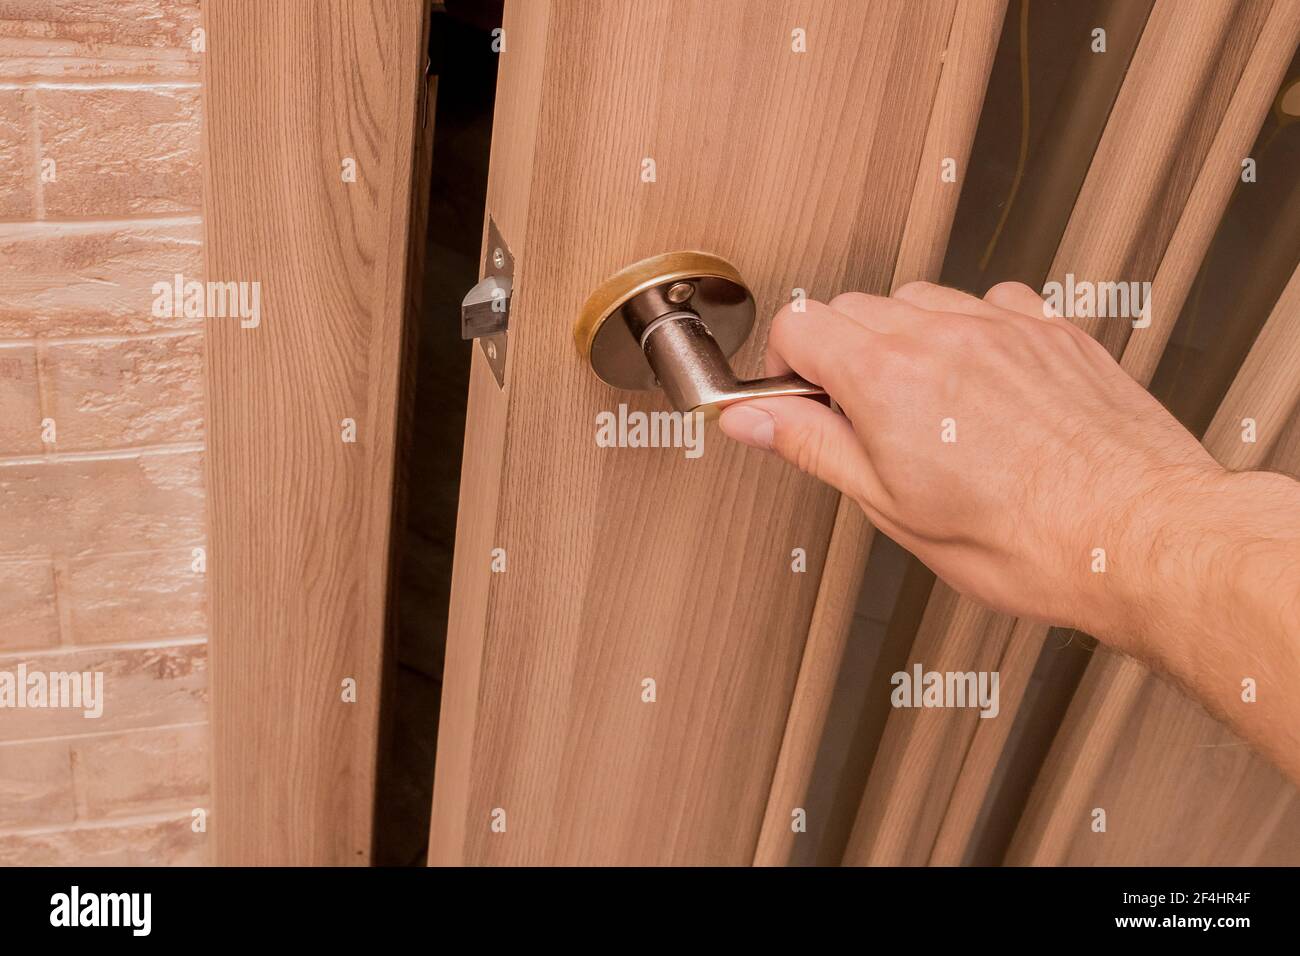 A man's hand holding an iron door handle opens or closes a wooden door indoors. Stock Photo